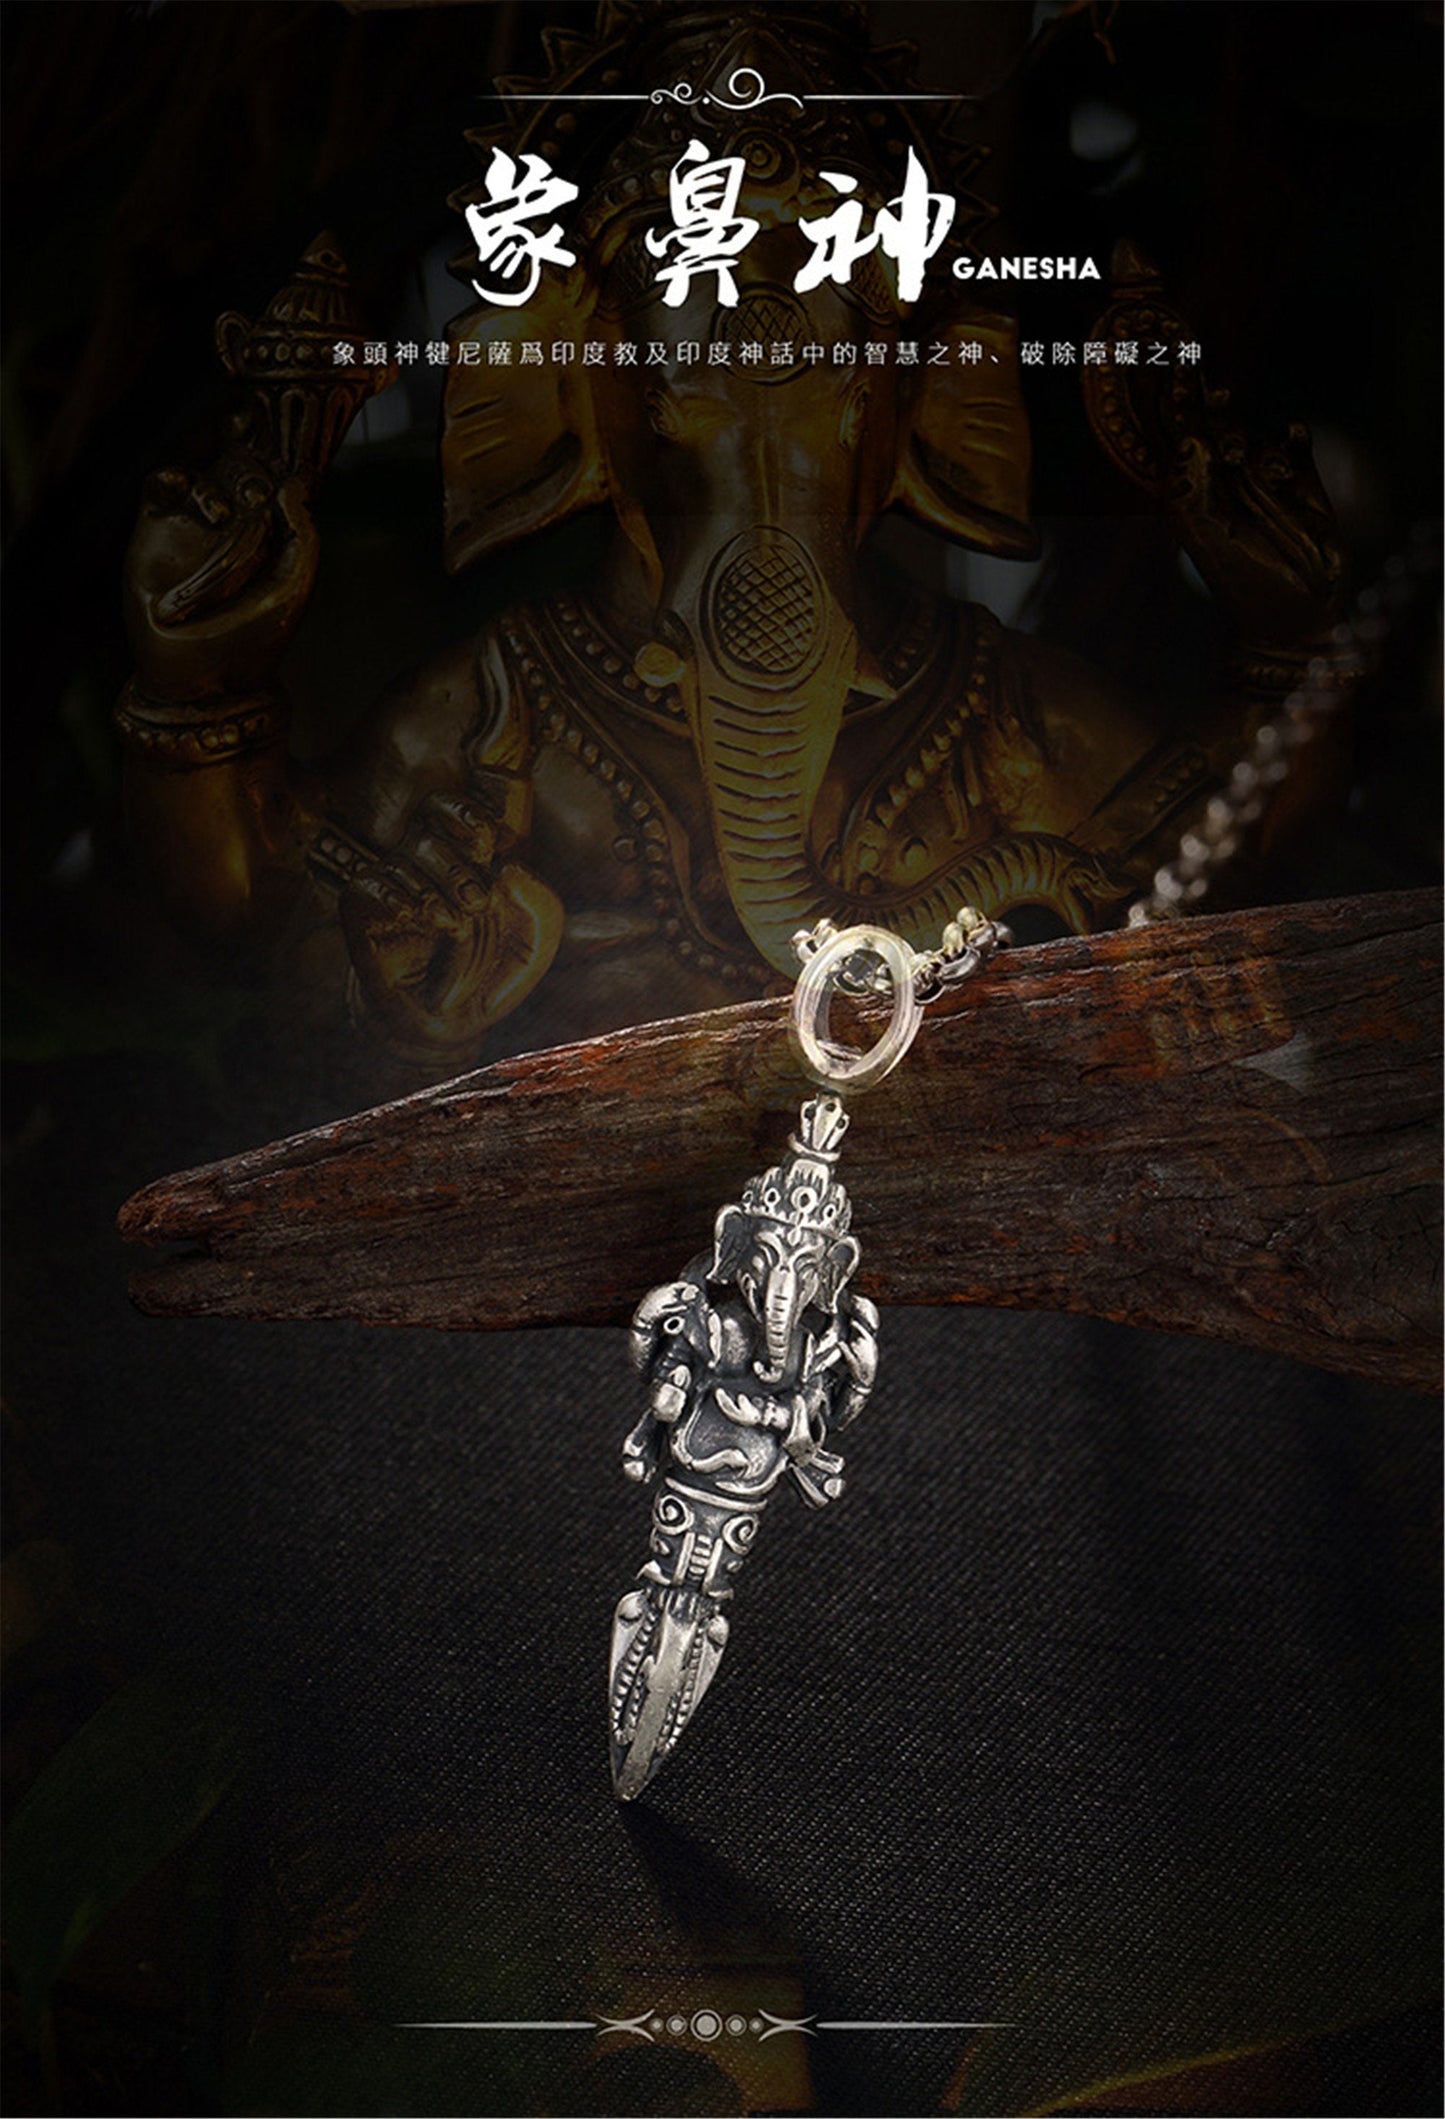 Gandhanra Dorje Phurba Dagger Necklace,Ganesha Pendant(Elephant God),Kila Buddhist Protection Amulet, Sterling Silver Tibetan Jewelry